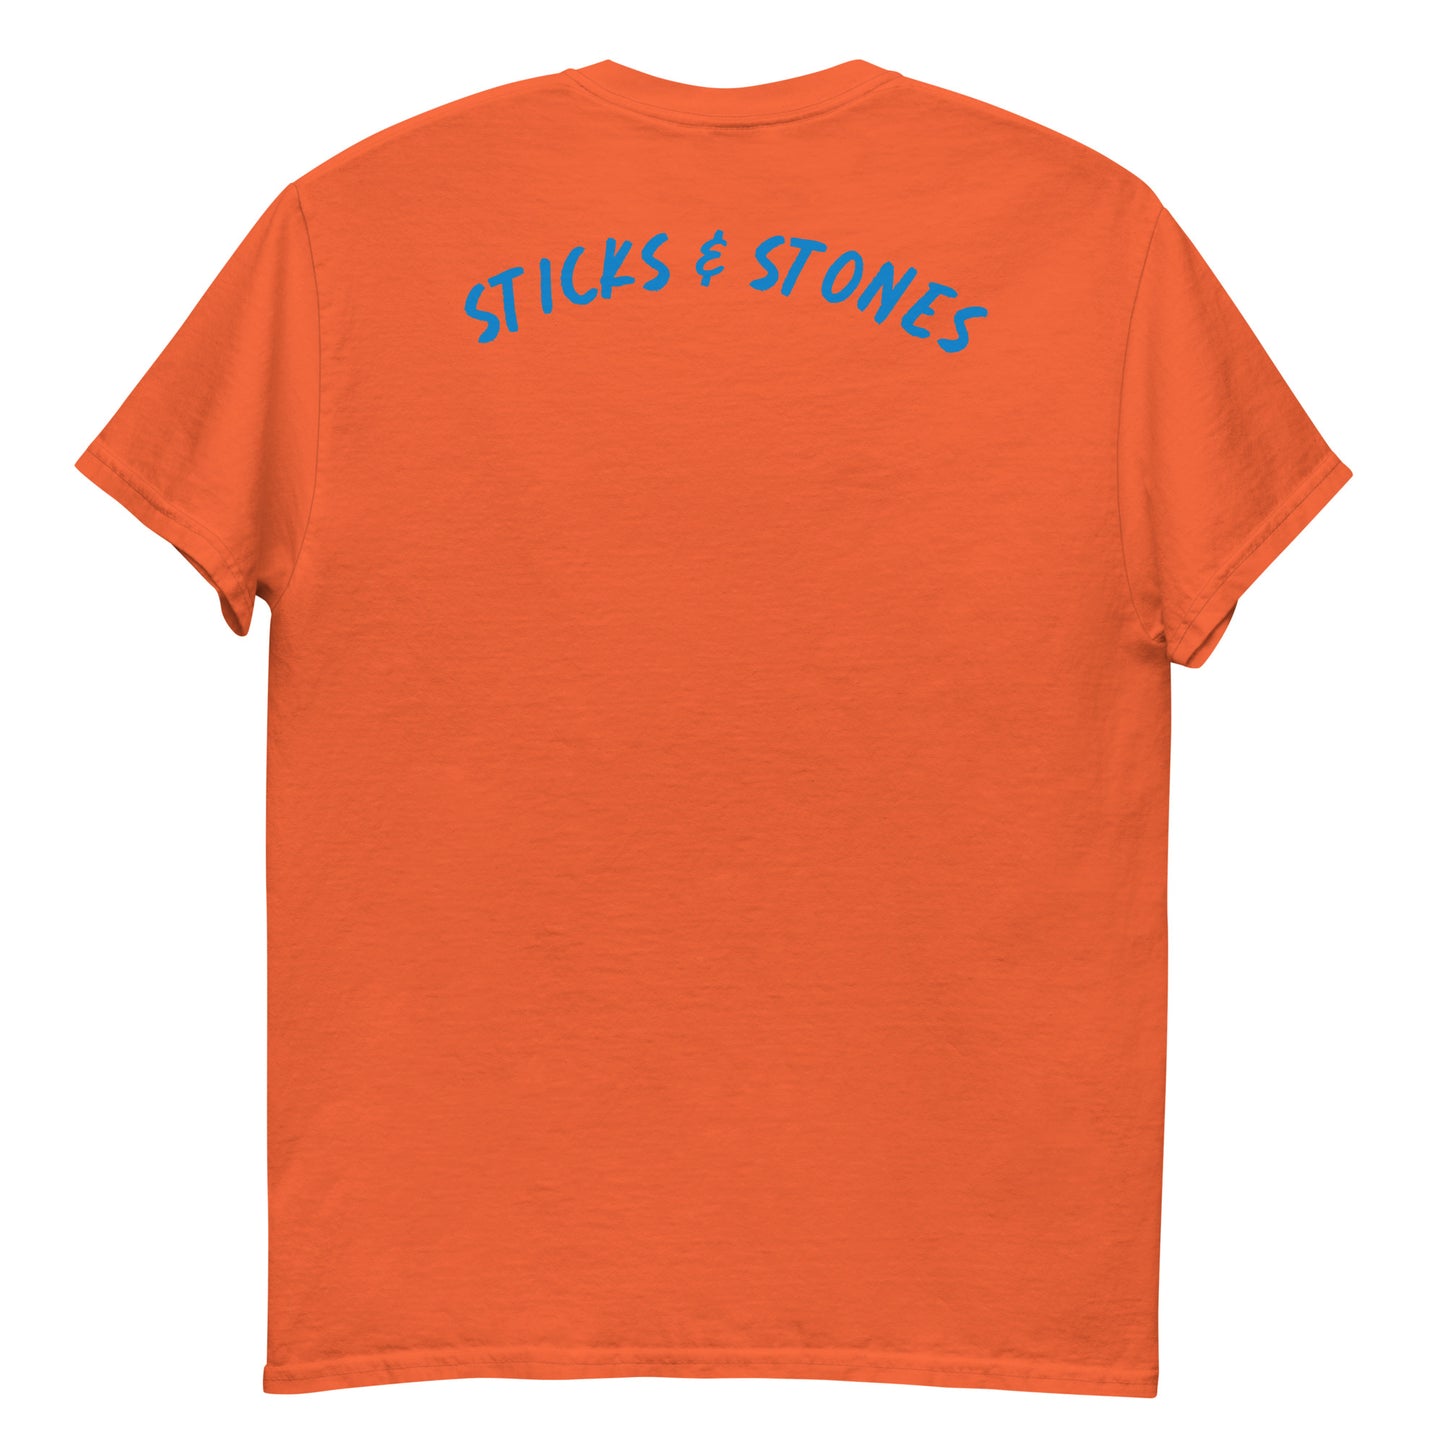 Sticks & Stones Boxing Men's Classic Tee